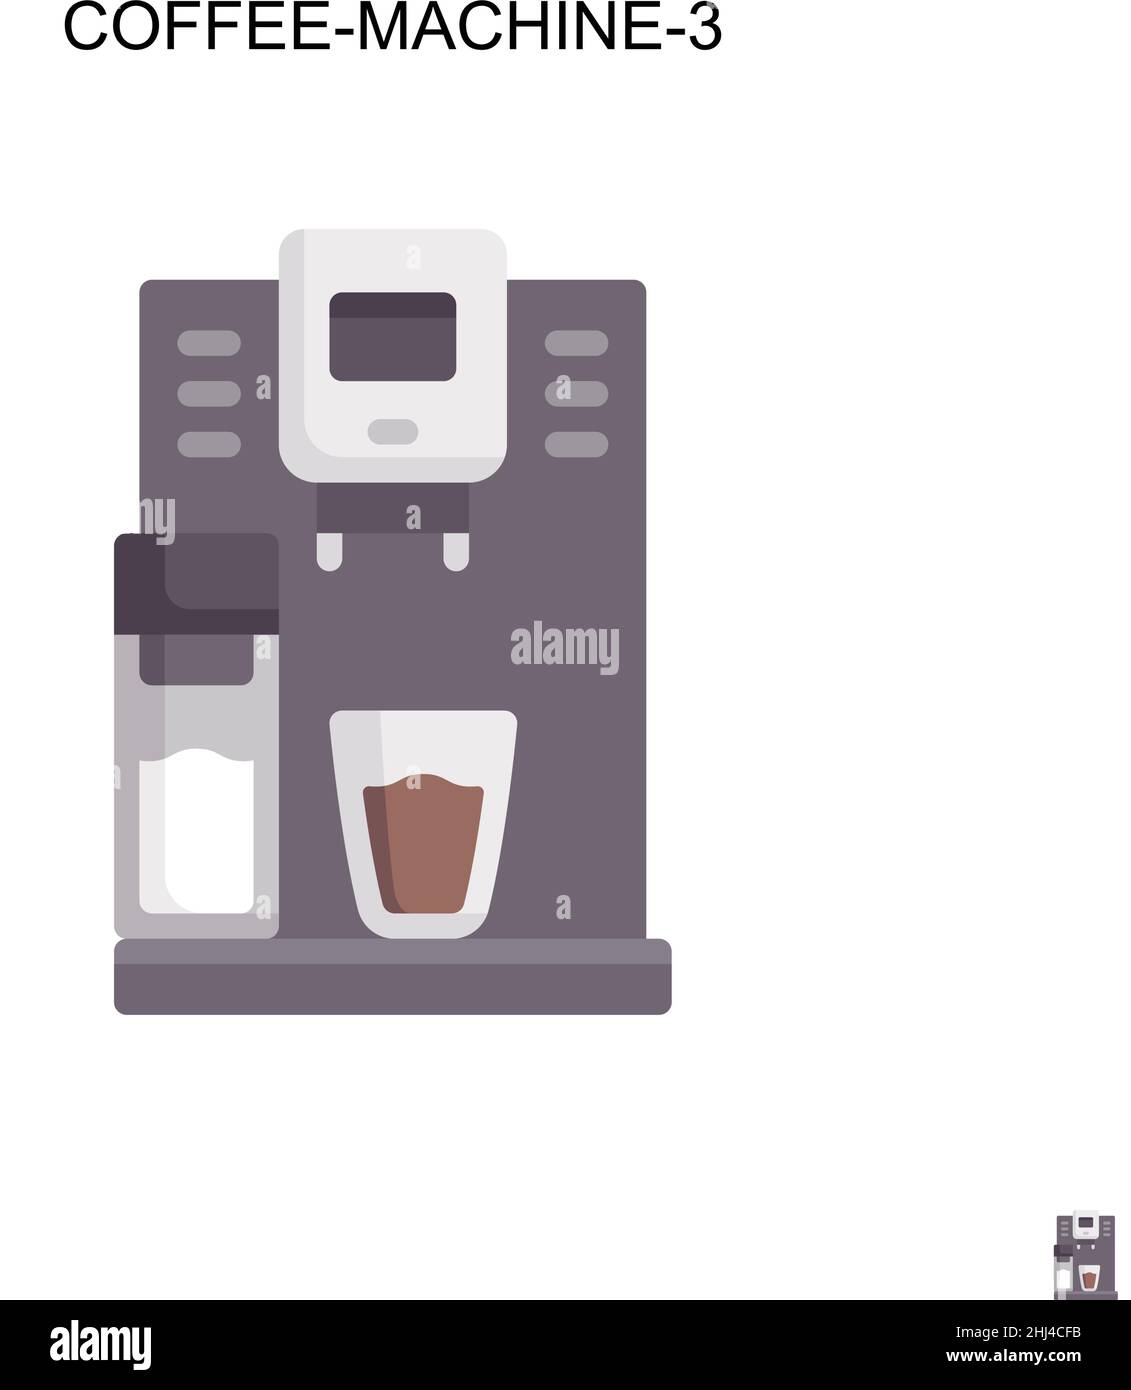 Smart phone apps for coffee machine. Original design Stock Photo